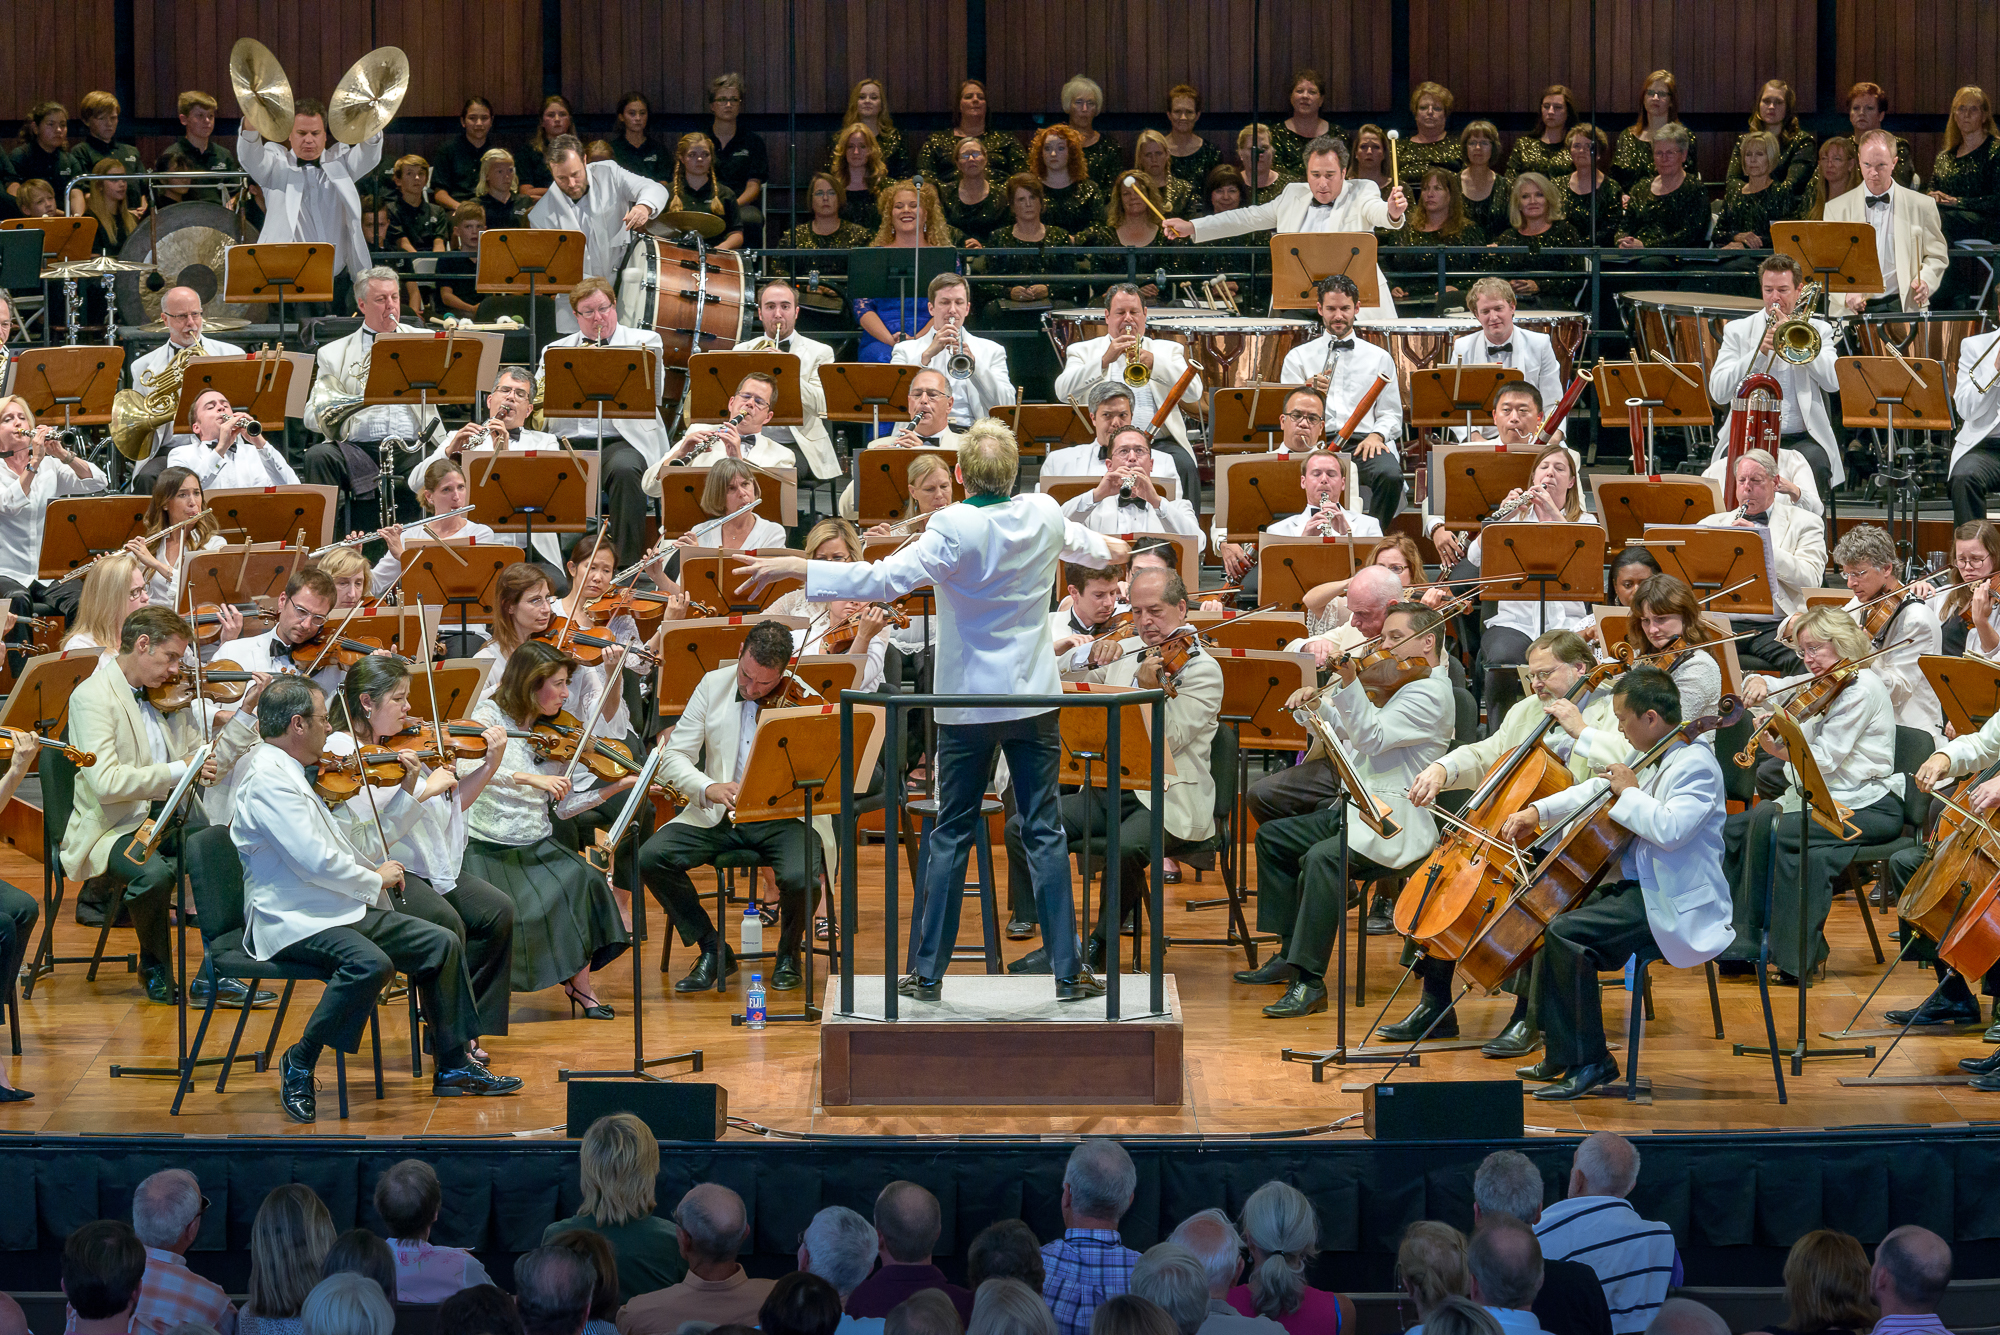 2016 SVSS Mahler3 Orchestra 8-18-16 - 27549 - Nils Ribi - web -2.jpg